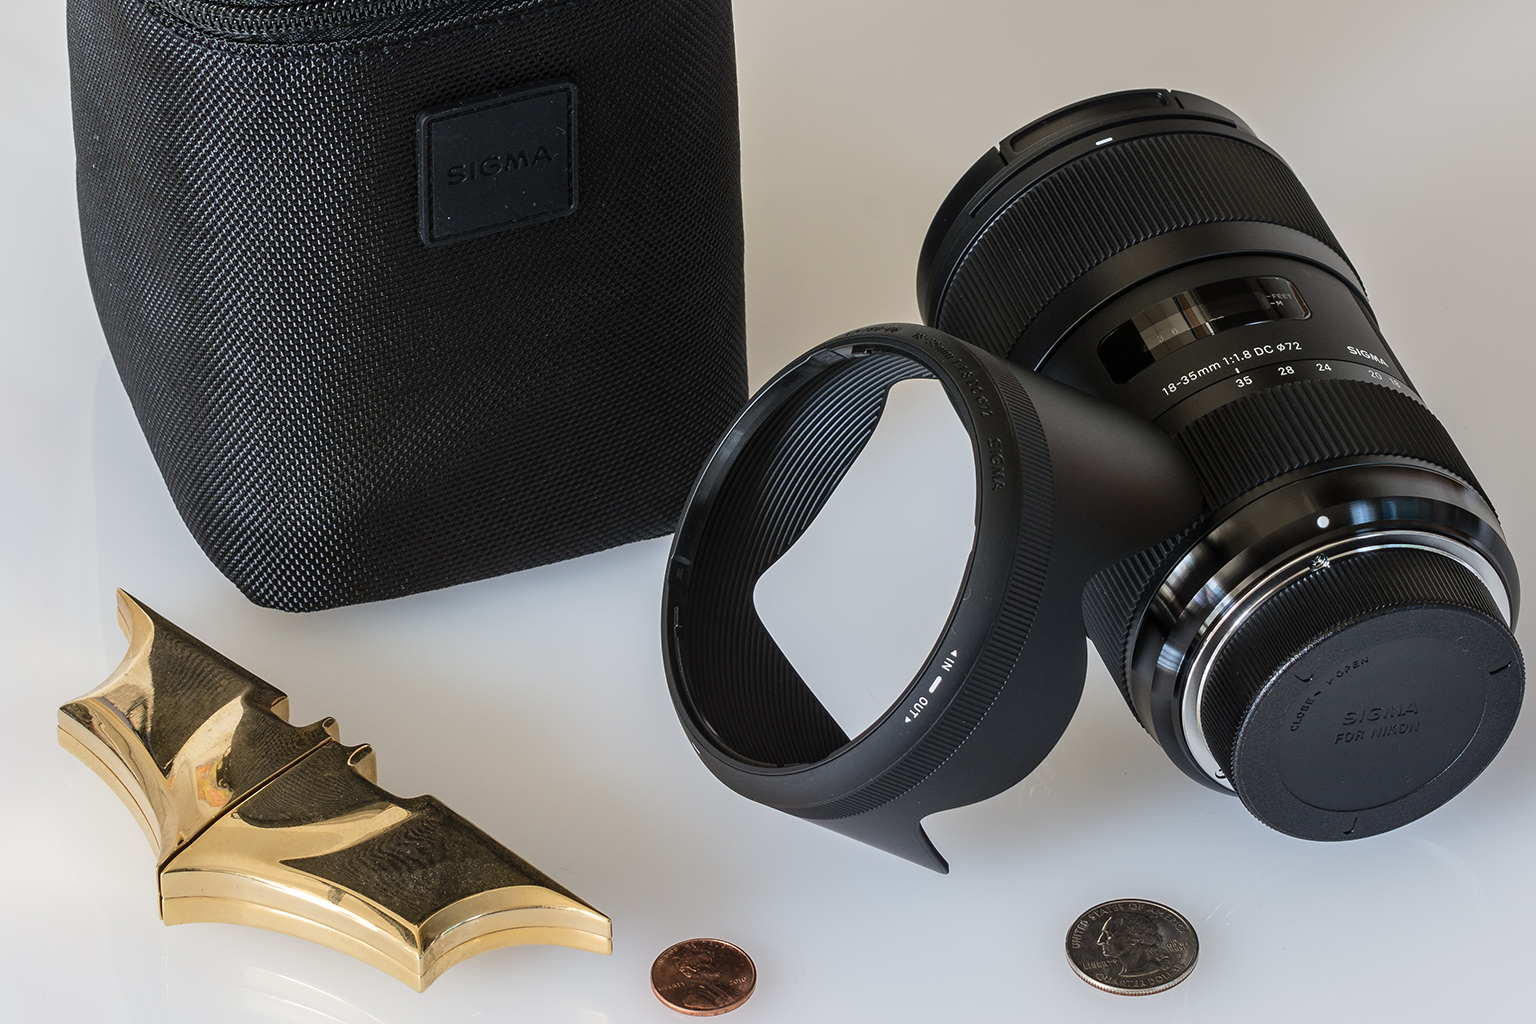 The Sigma 18-35 f/1.8 lens for Nikon.